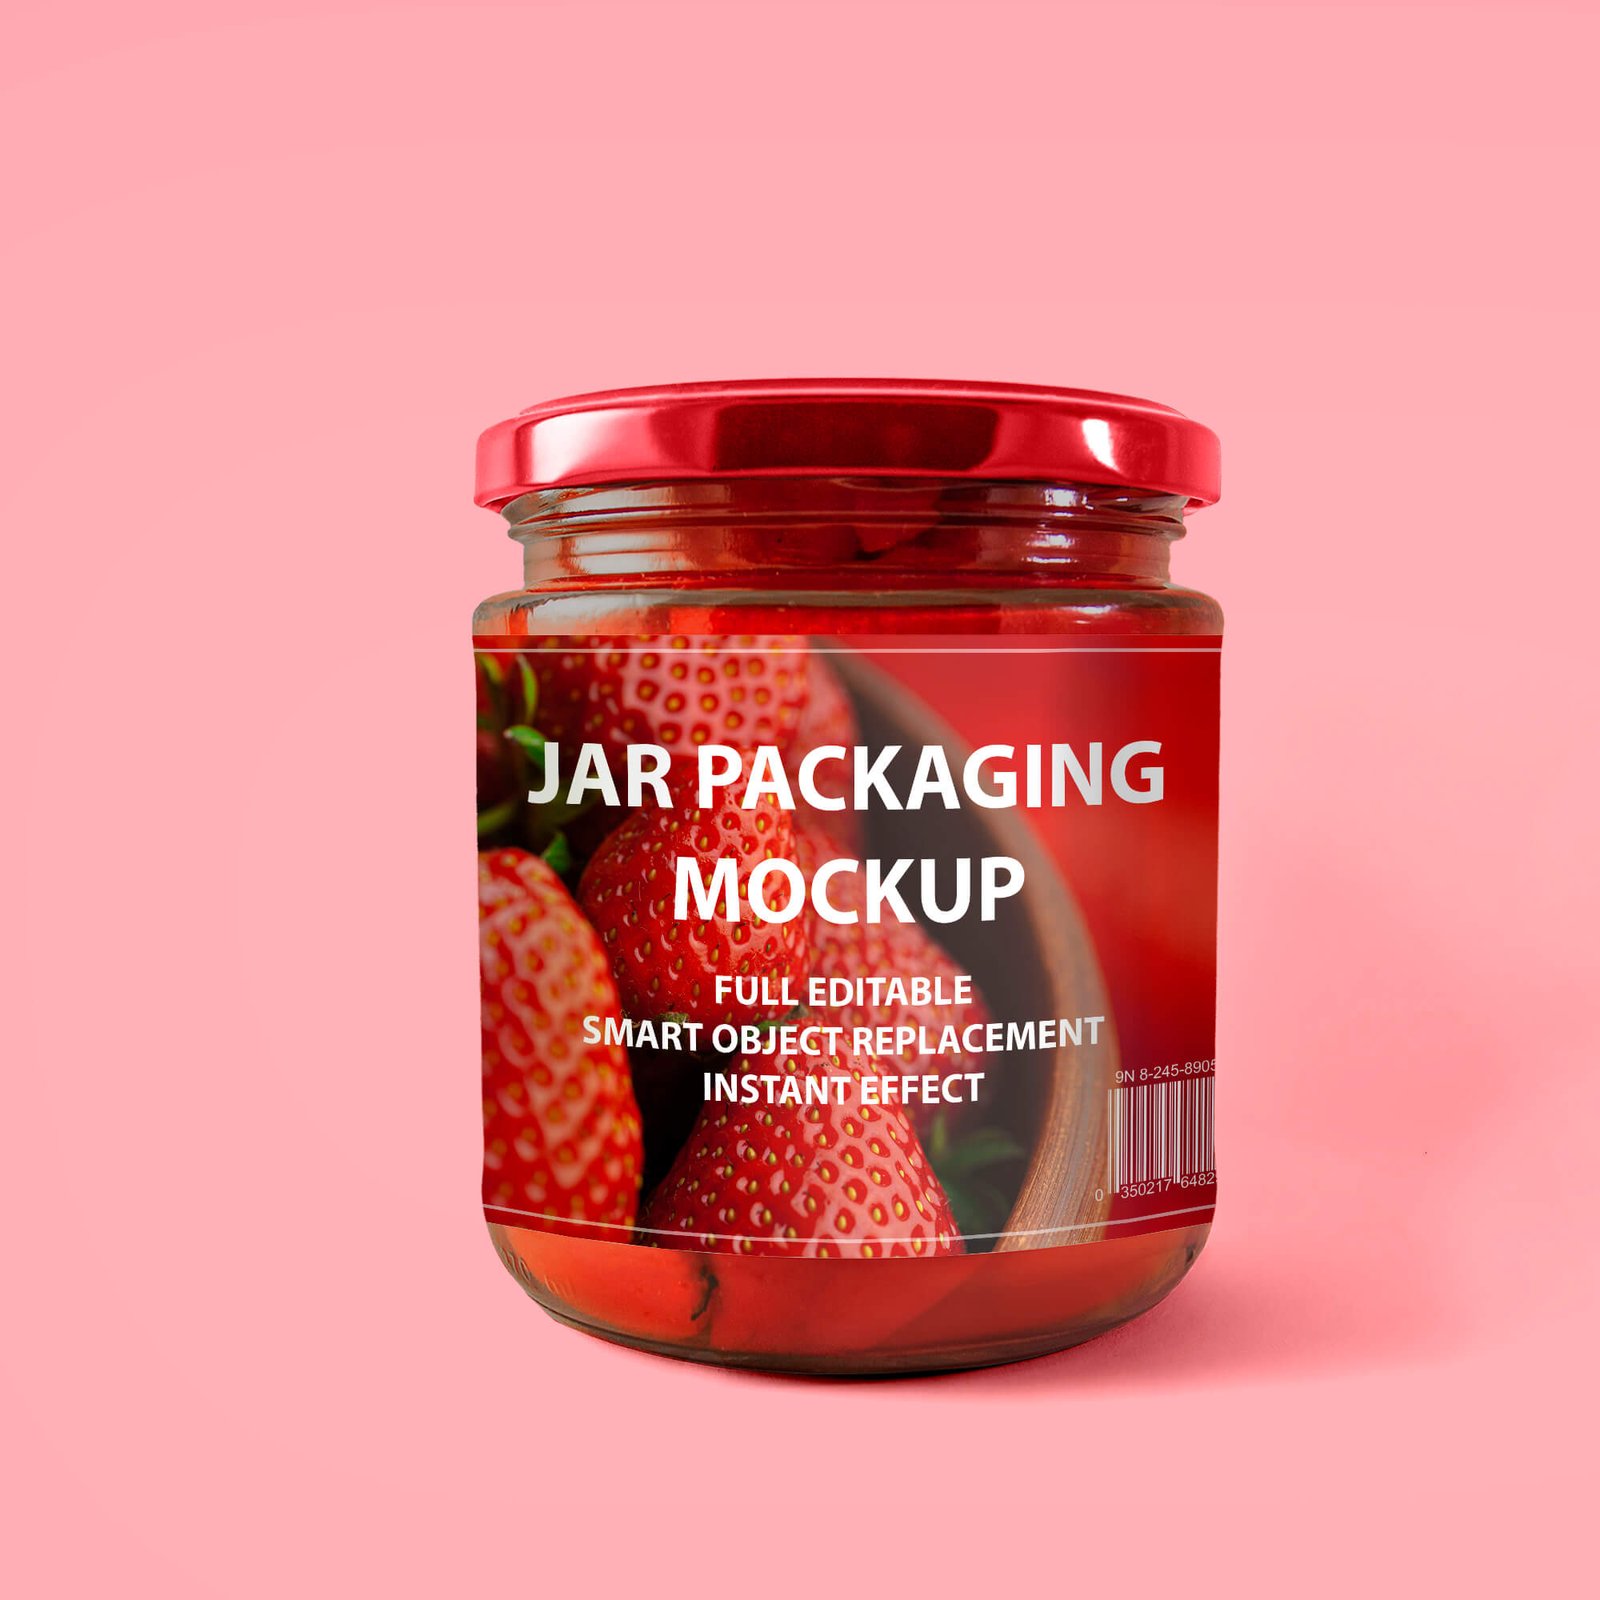 Design Free Jar Packaging Mockup PSD Template